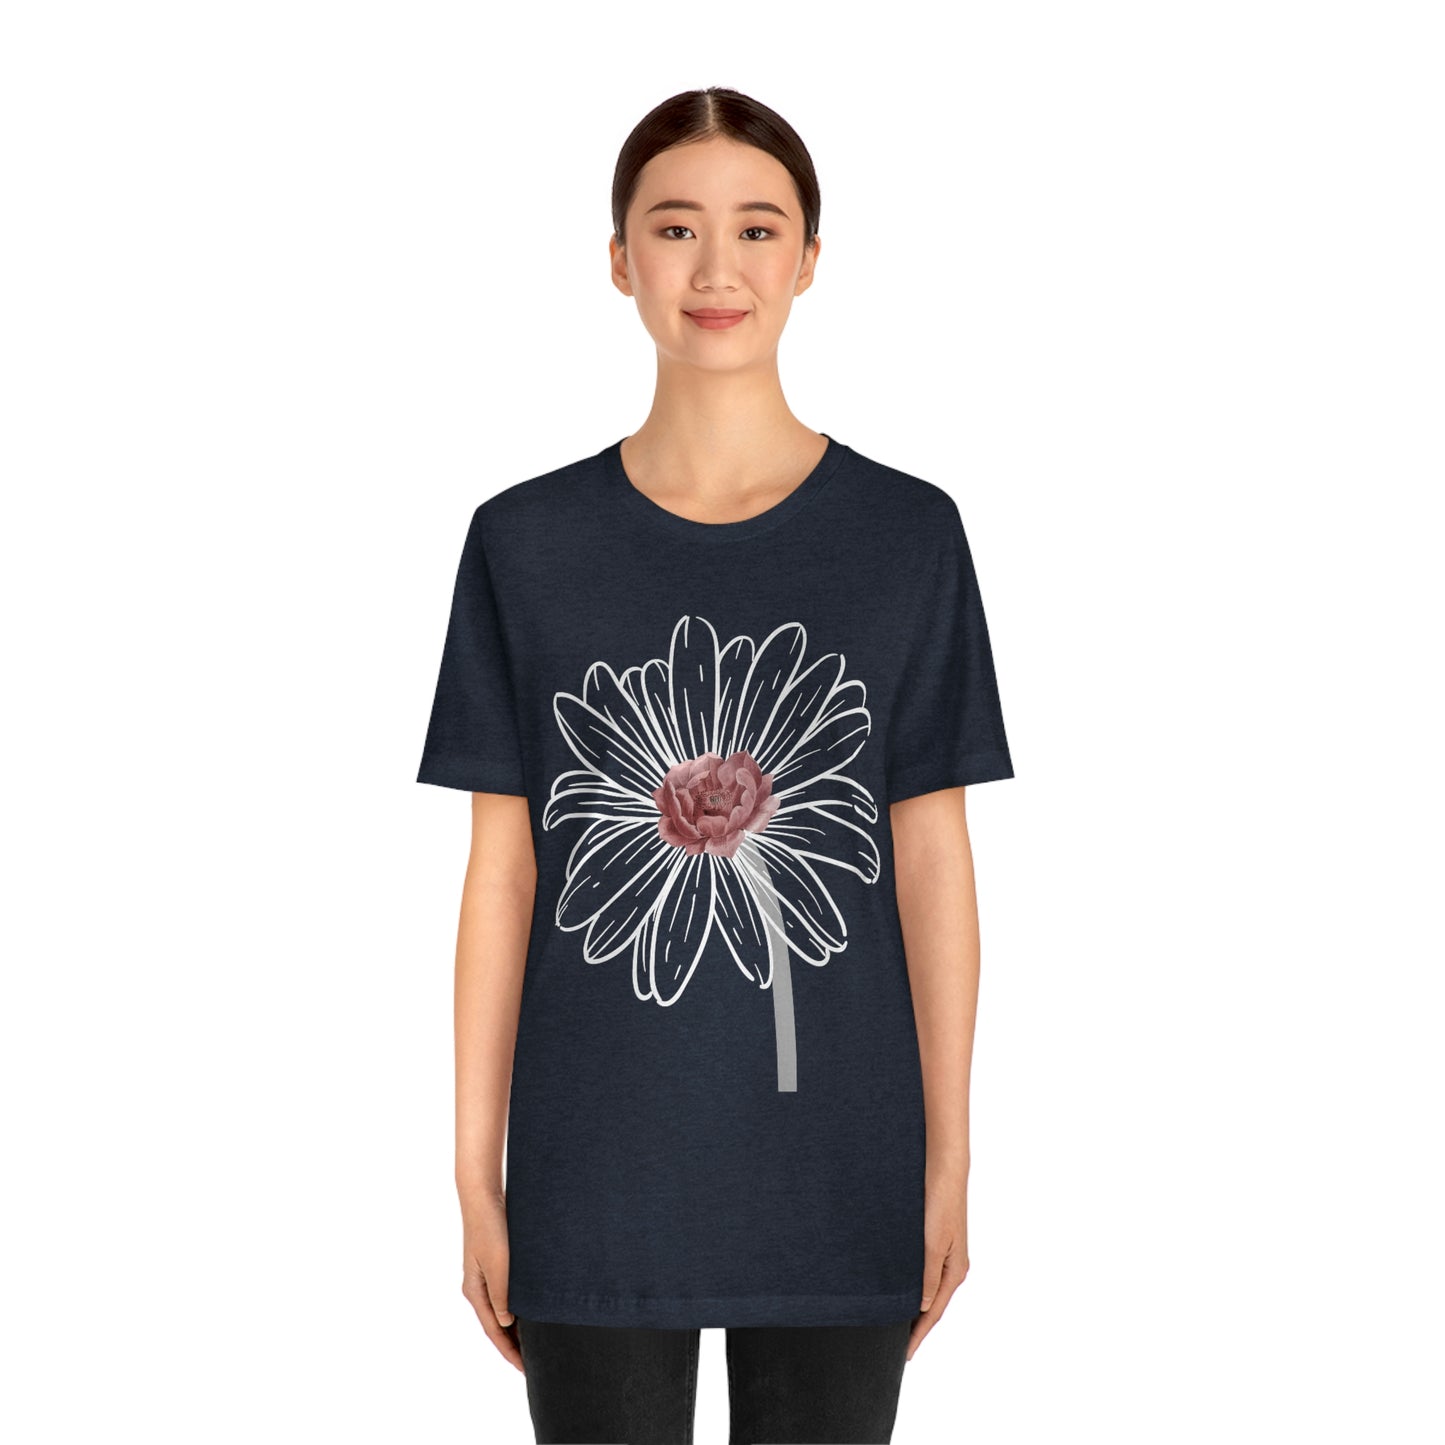 Flower Tshirt, Vintage Flower Shirt, Vintage Botanical Shirt, Vintage T-shirt, Graphic Tshirt, Botanical Print, Wildflower shirt, floral Tee